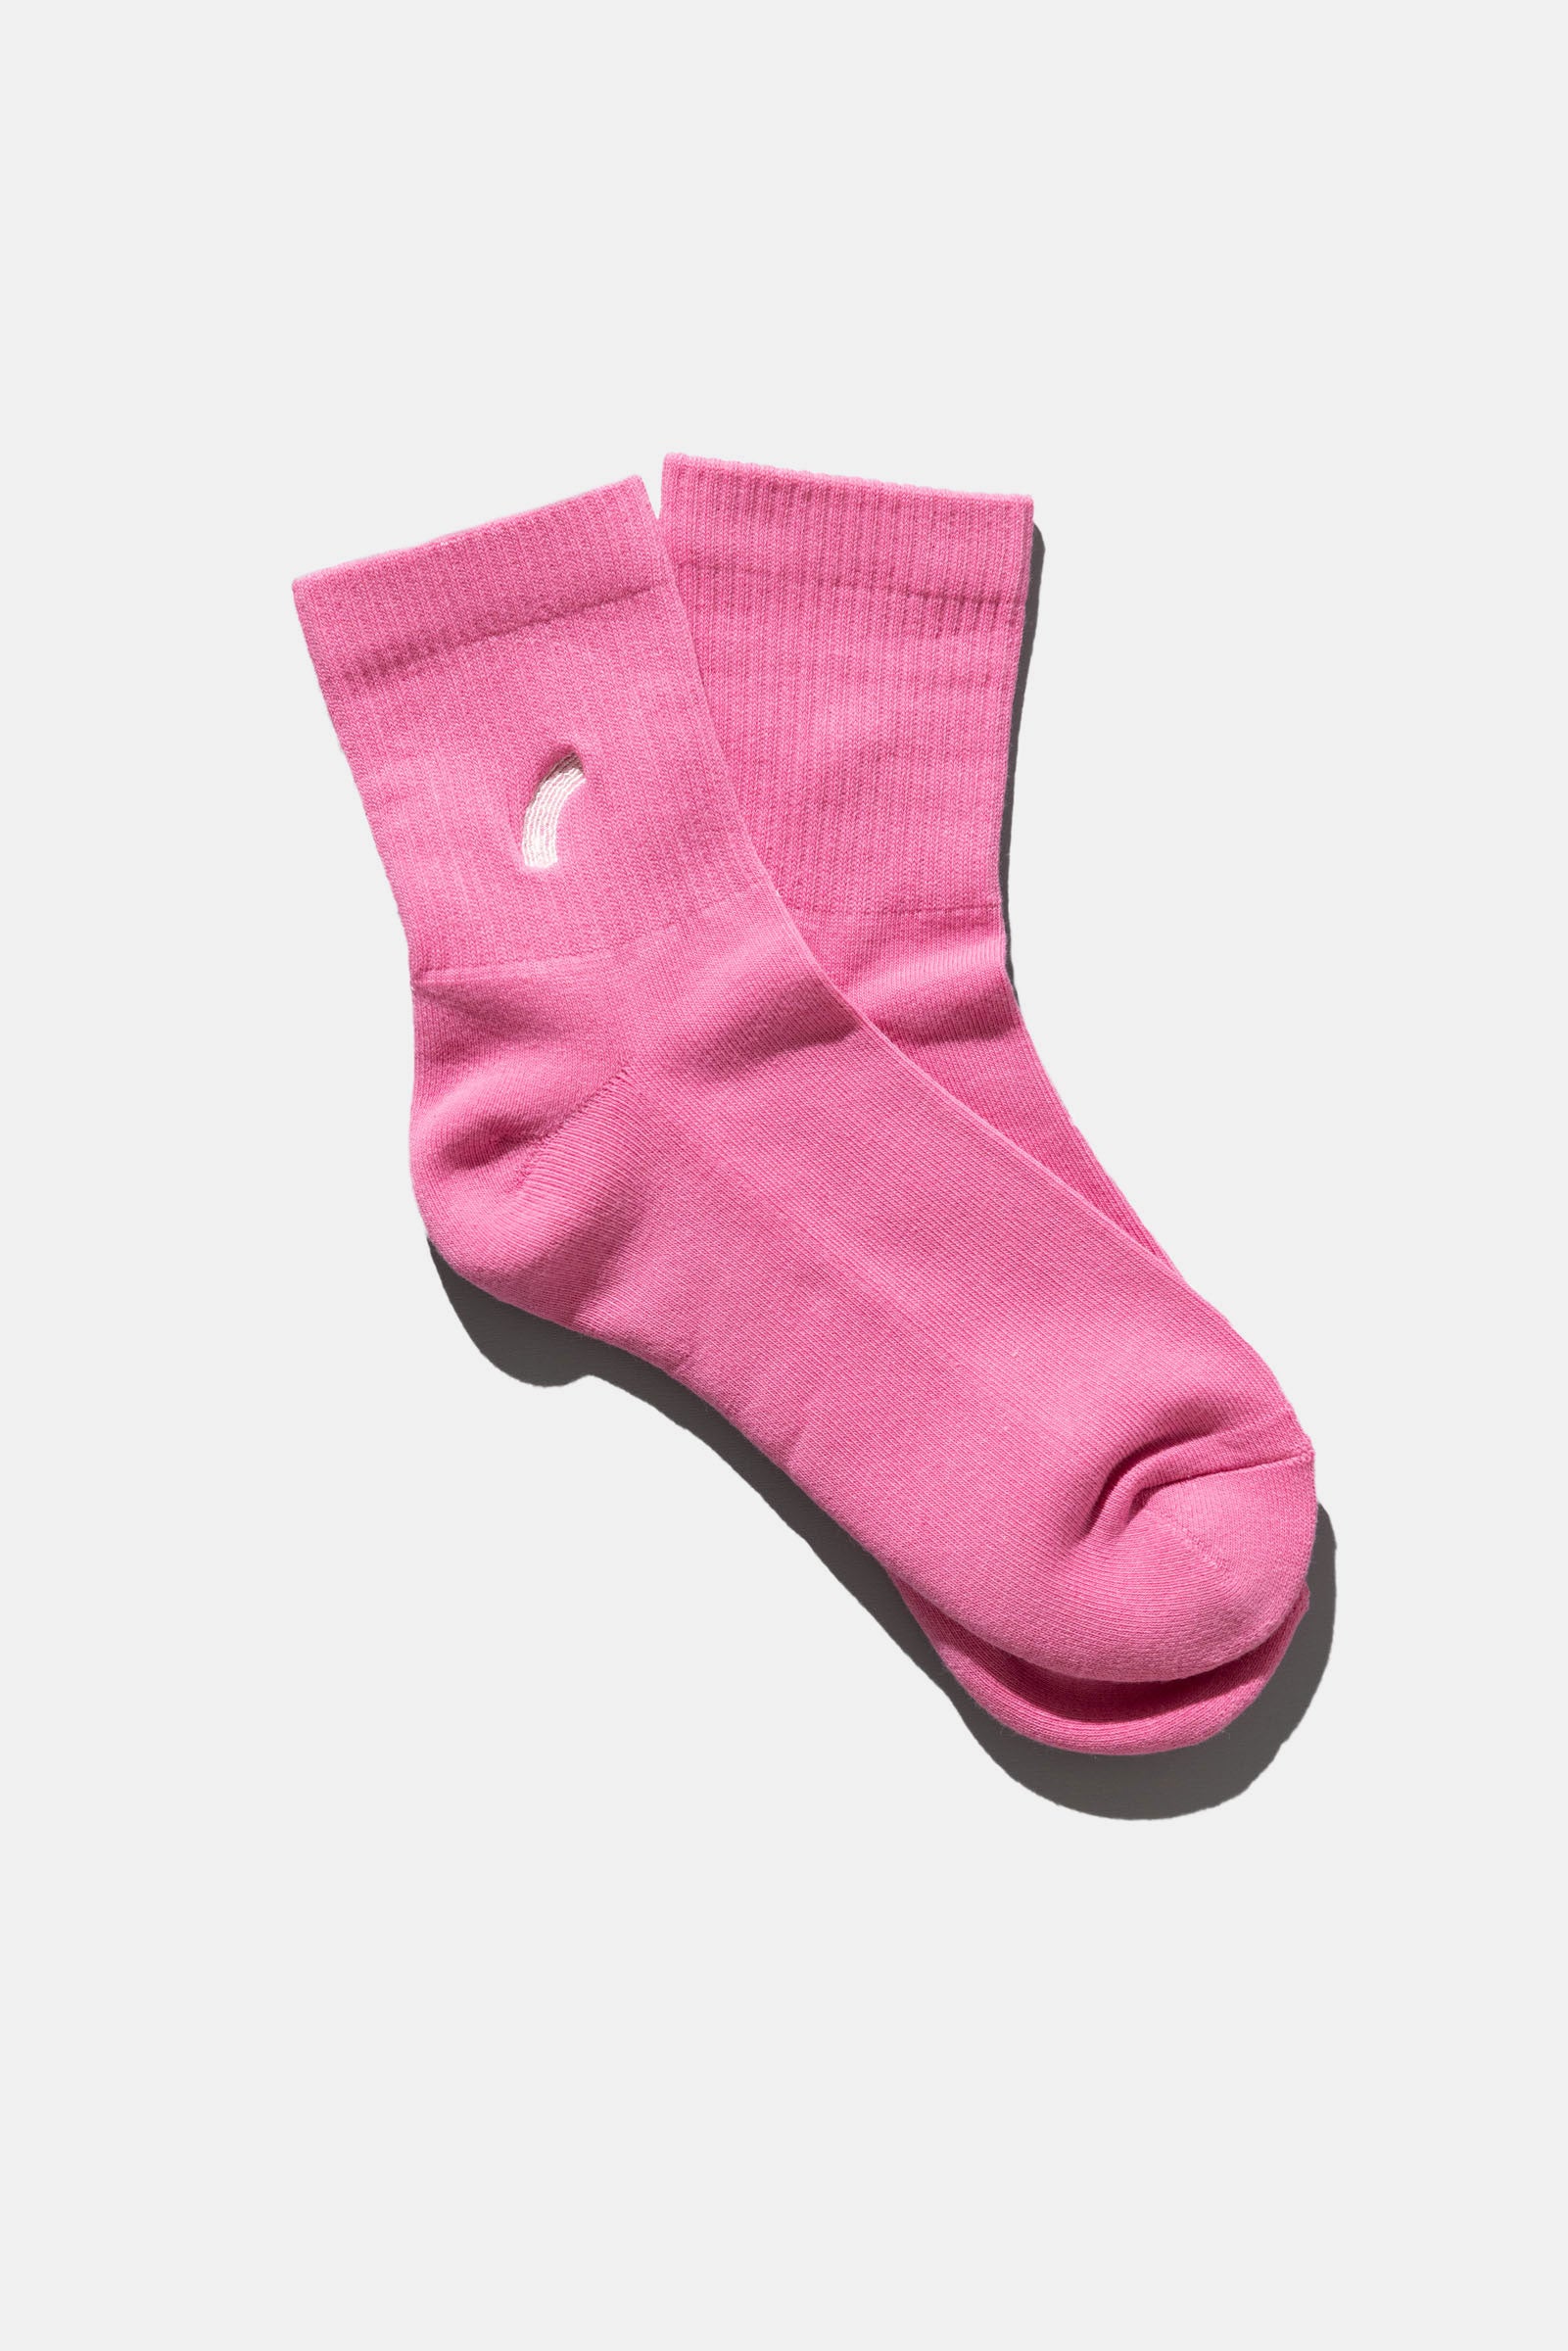 pinks socks